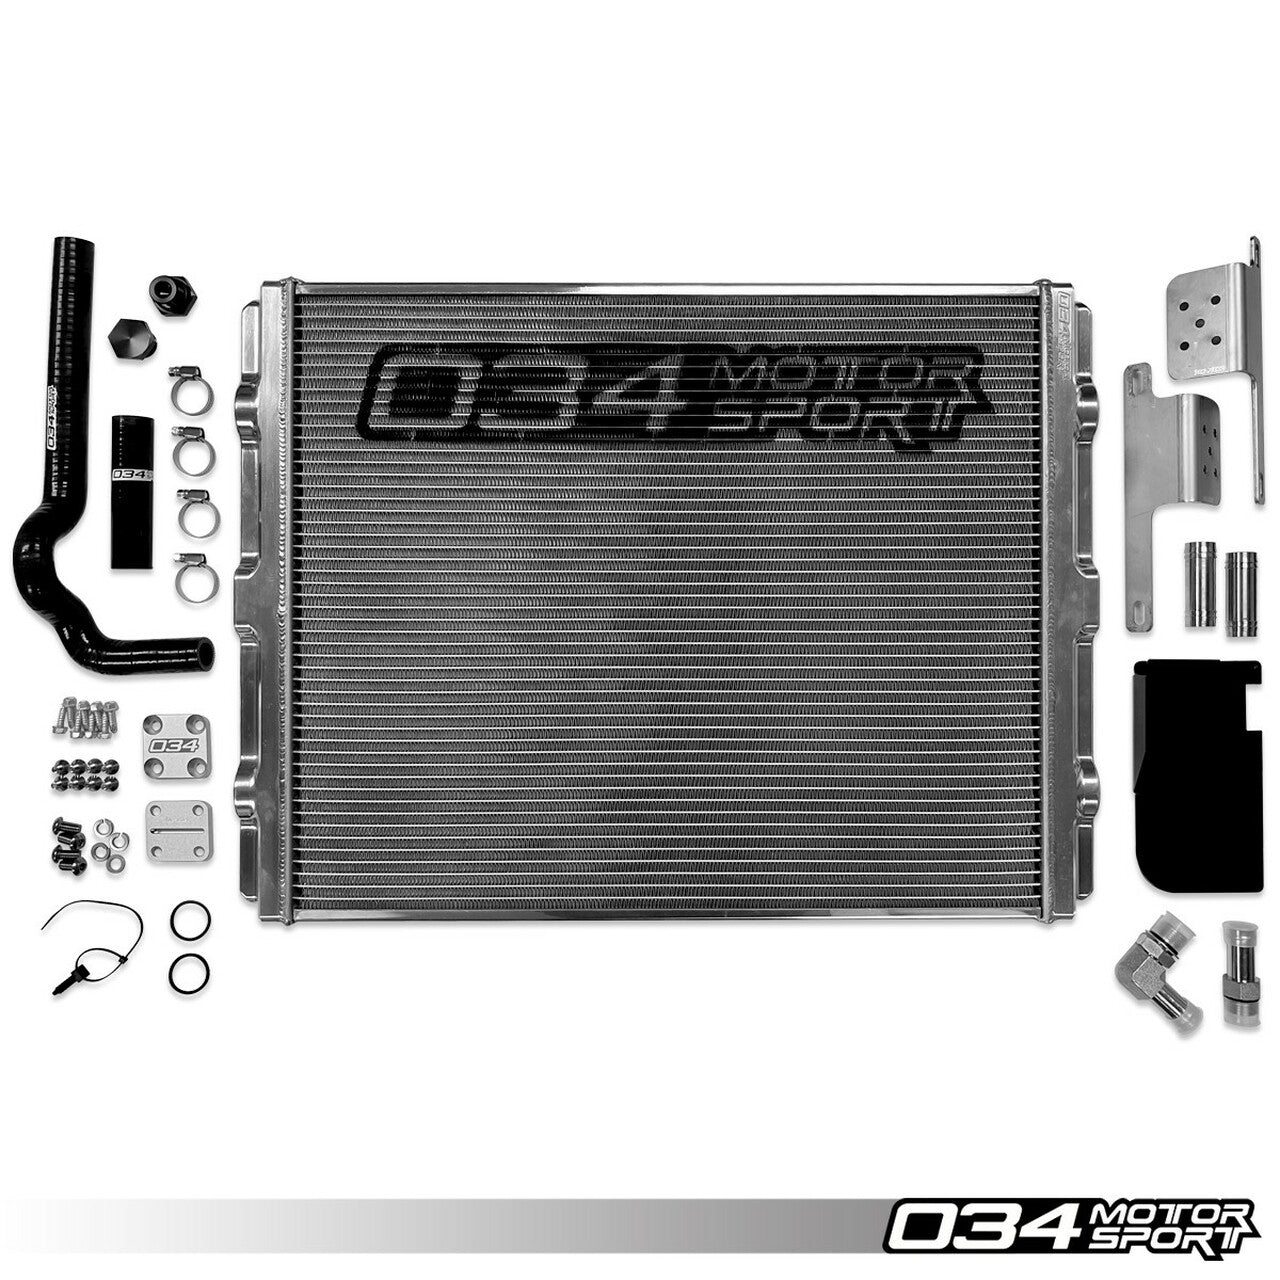 034Motorsport Supercharger Heat Exchanger Upgrade Kit For Audi B8/B8.5 Q5/SQ5 - Wayside Performance